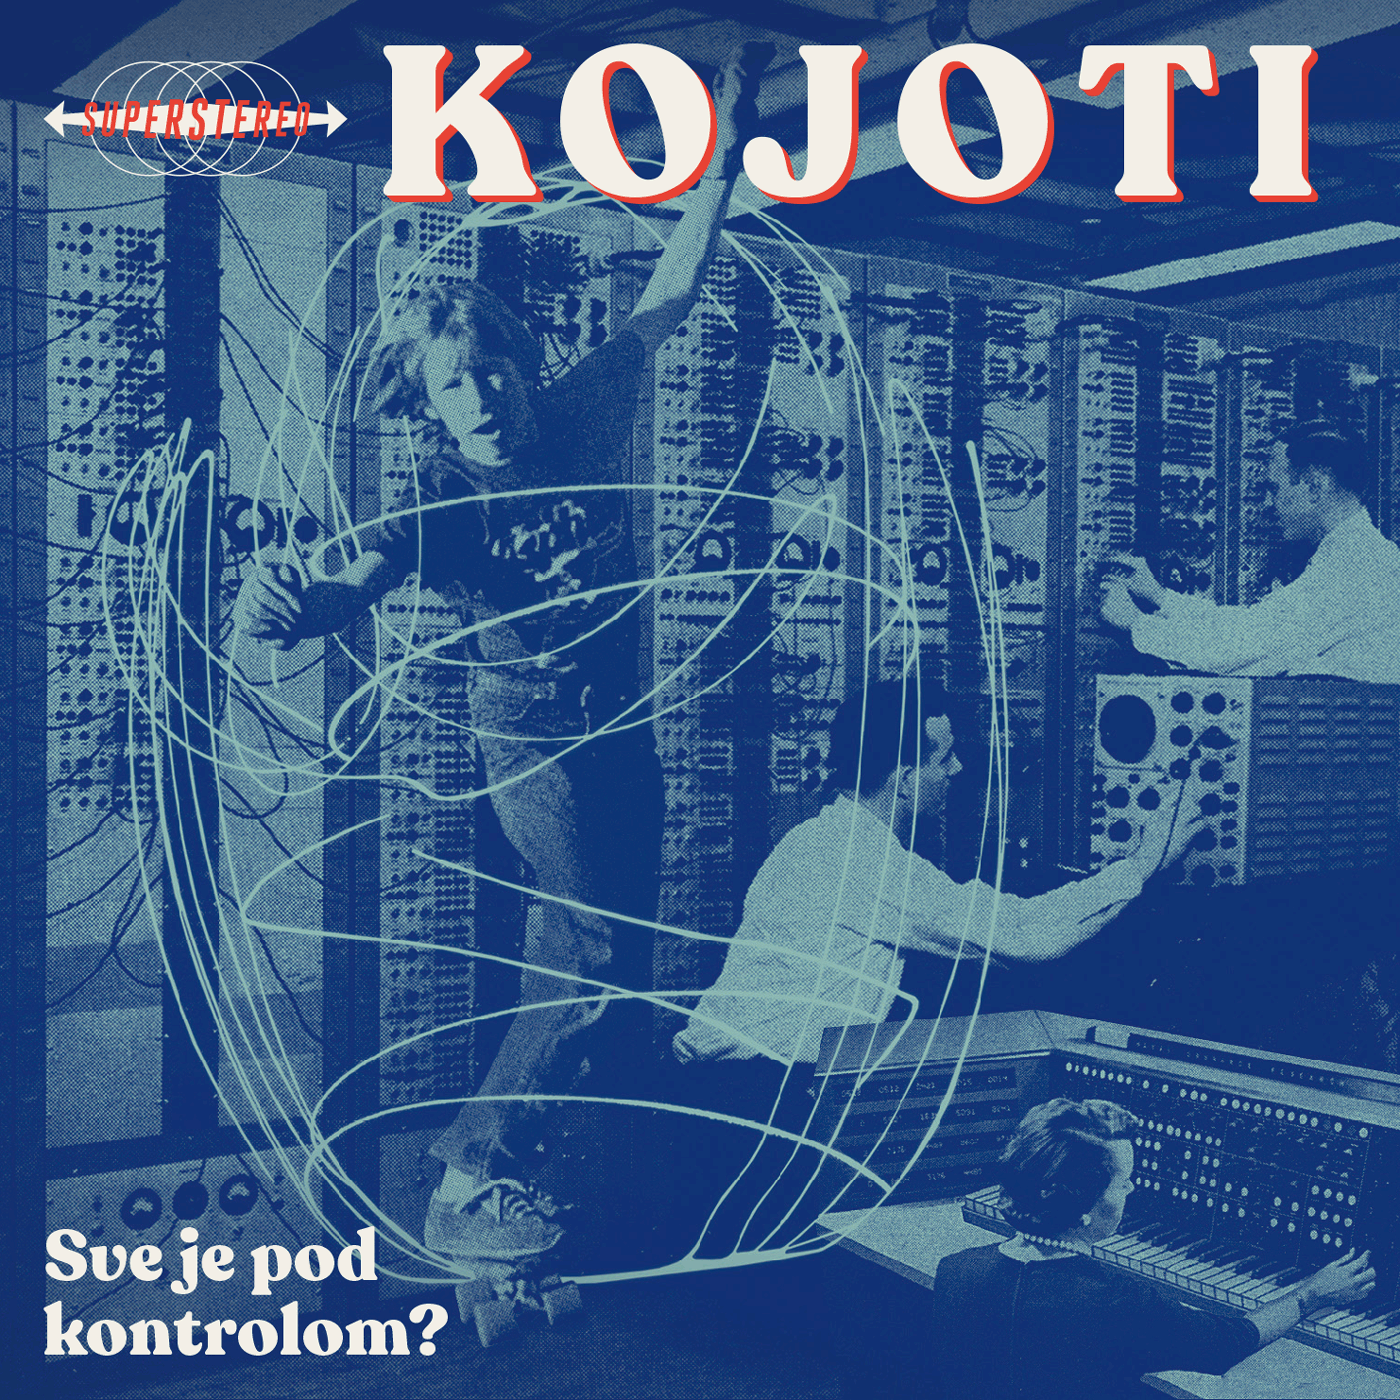 You are currently viewing Kojoti ”Sve je pod kontrolom?” pre-order novog albuma